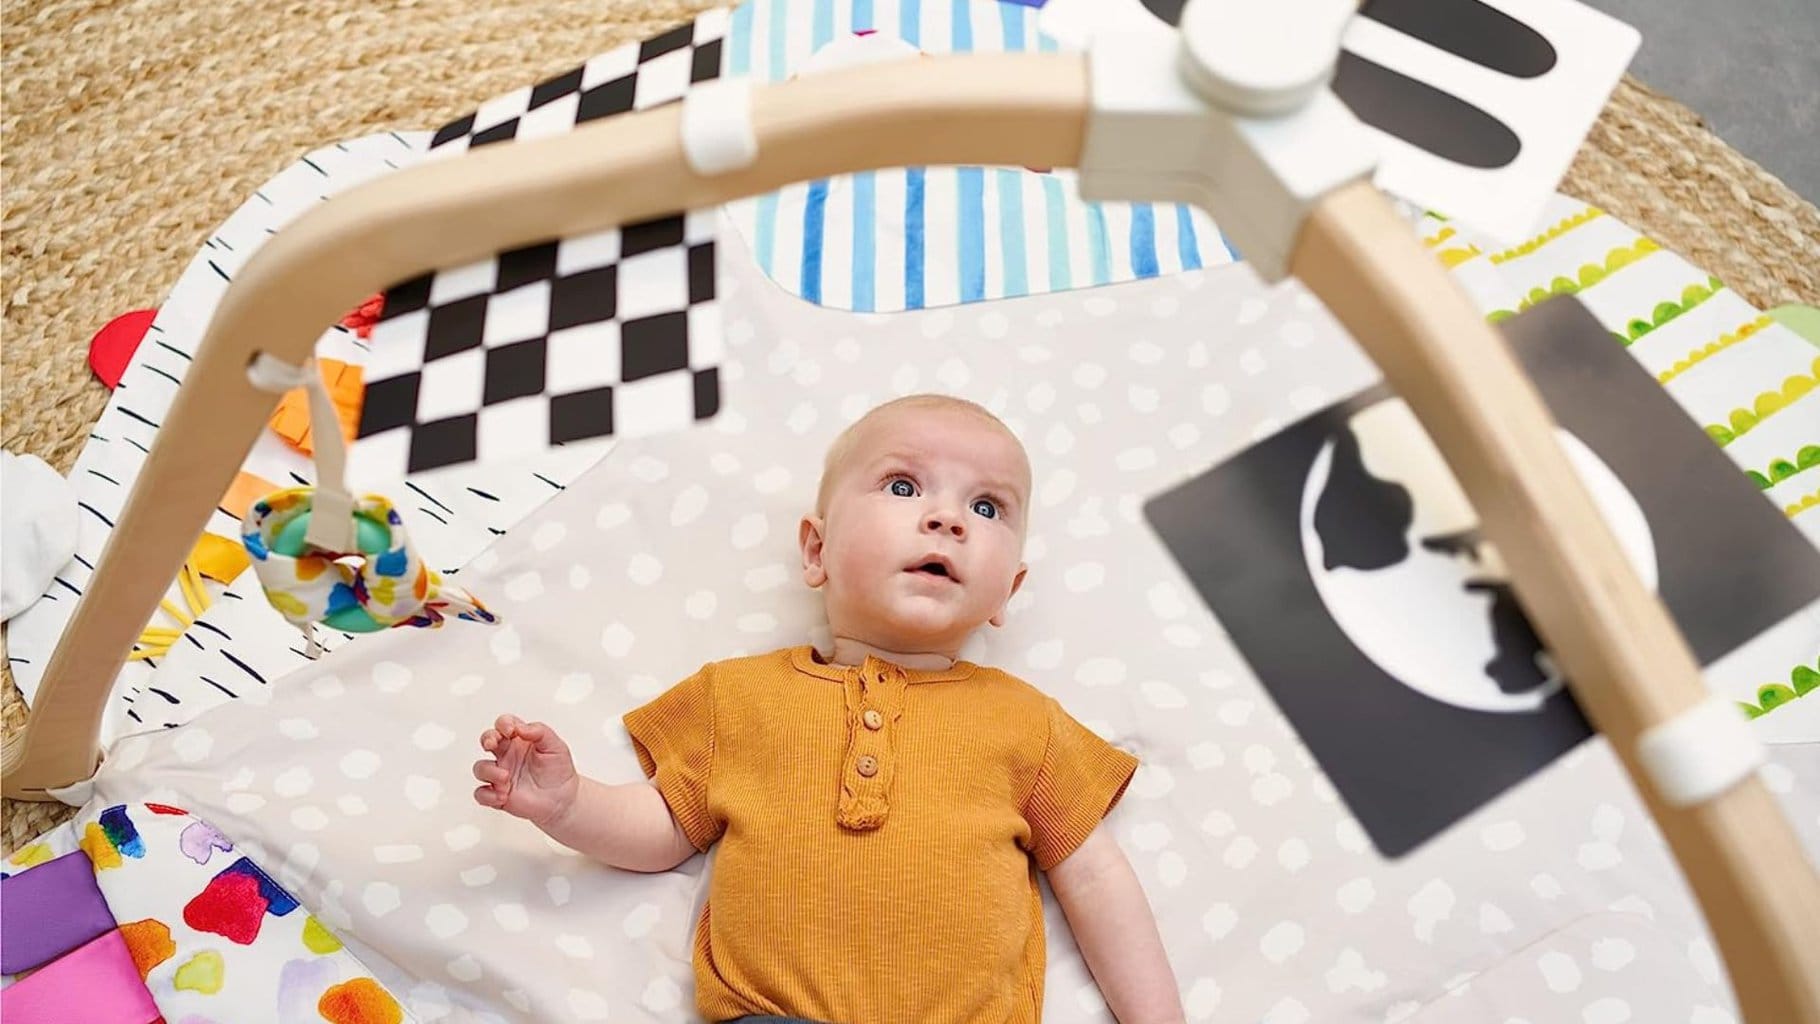 Baby registry ideas: Lovevery The Play Gym 